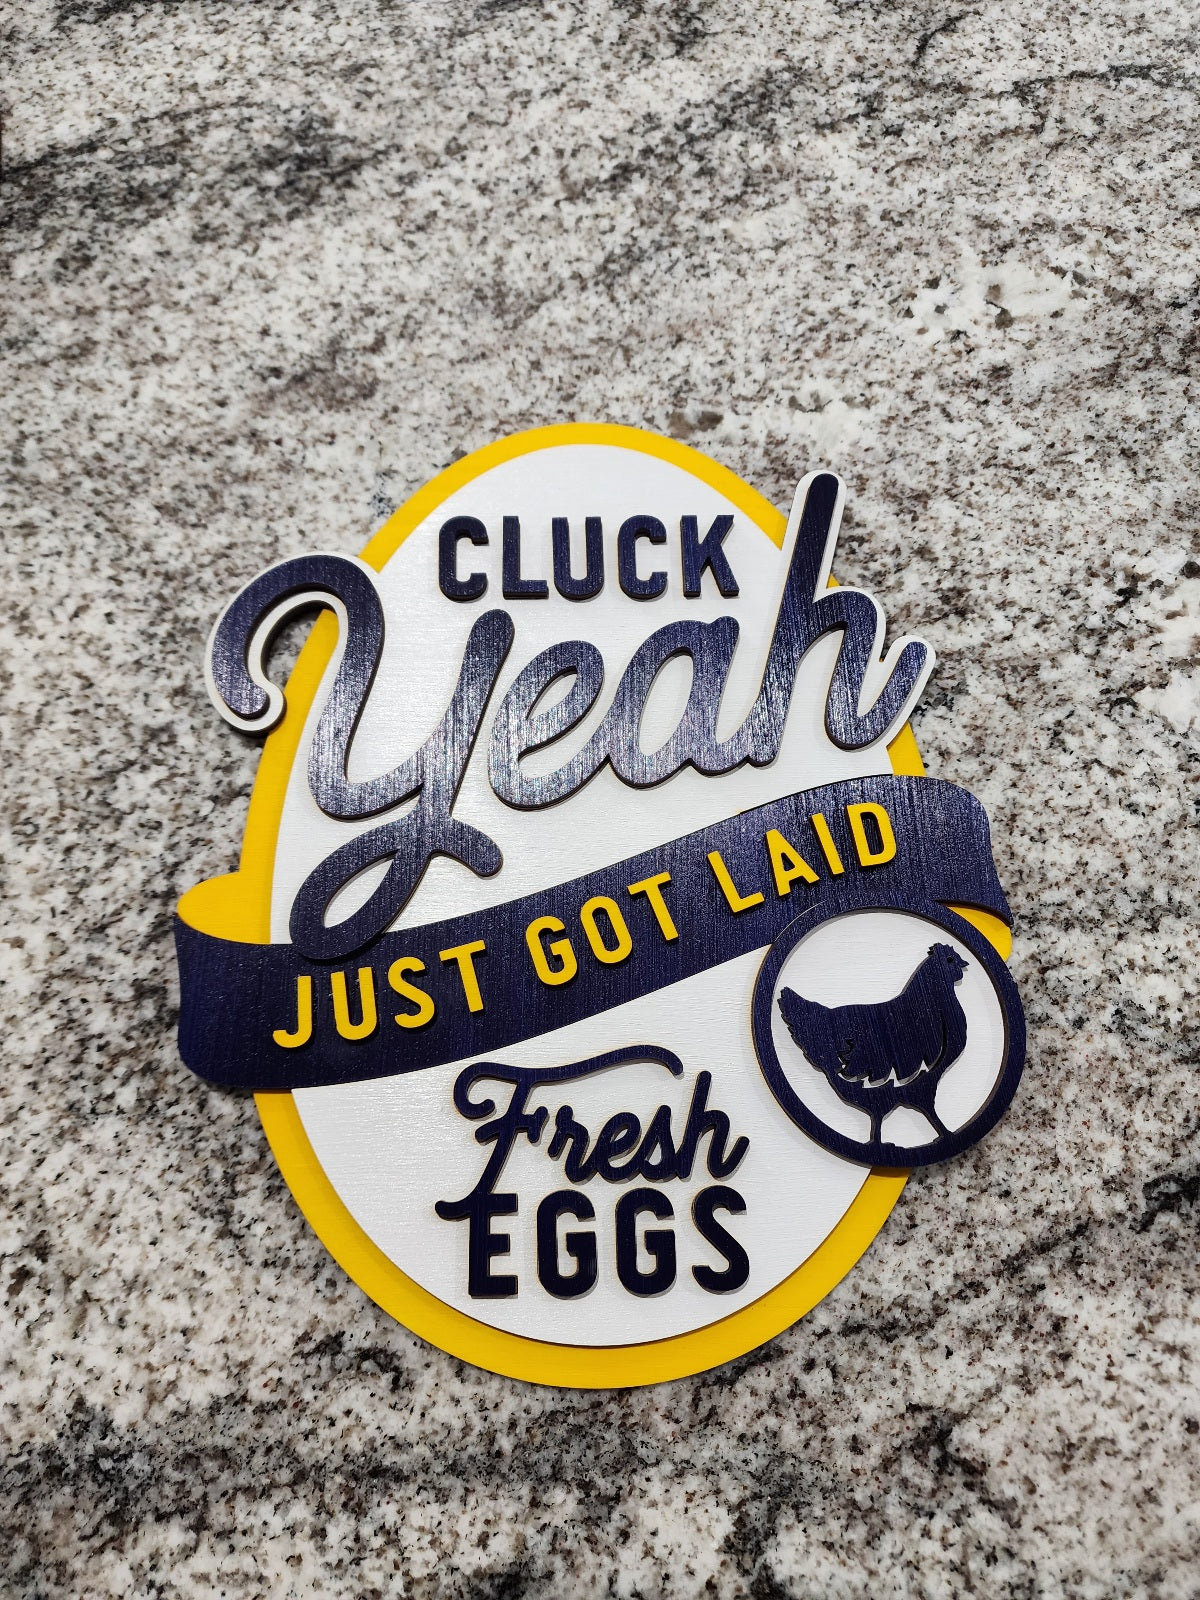 Cluck Yeah multi-layer Chicken Sign - Fresh Eggs!